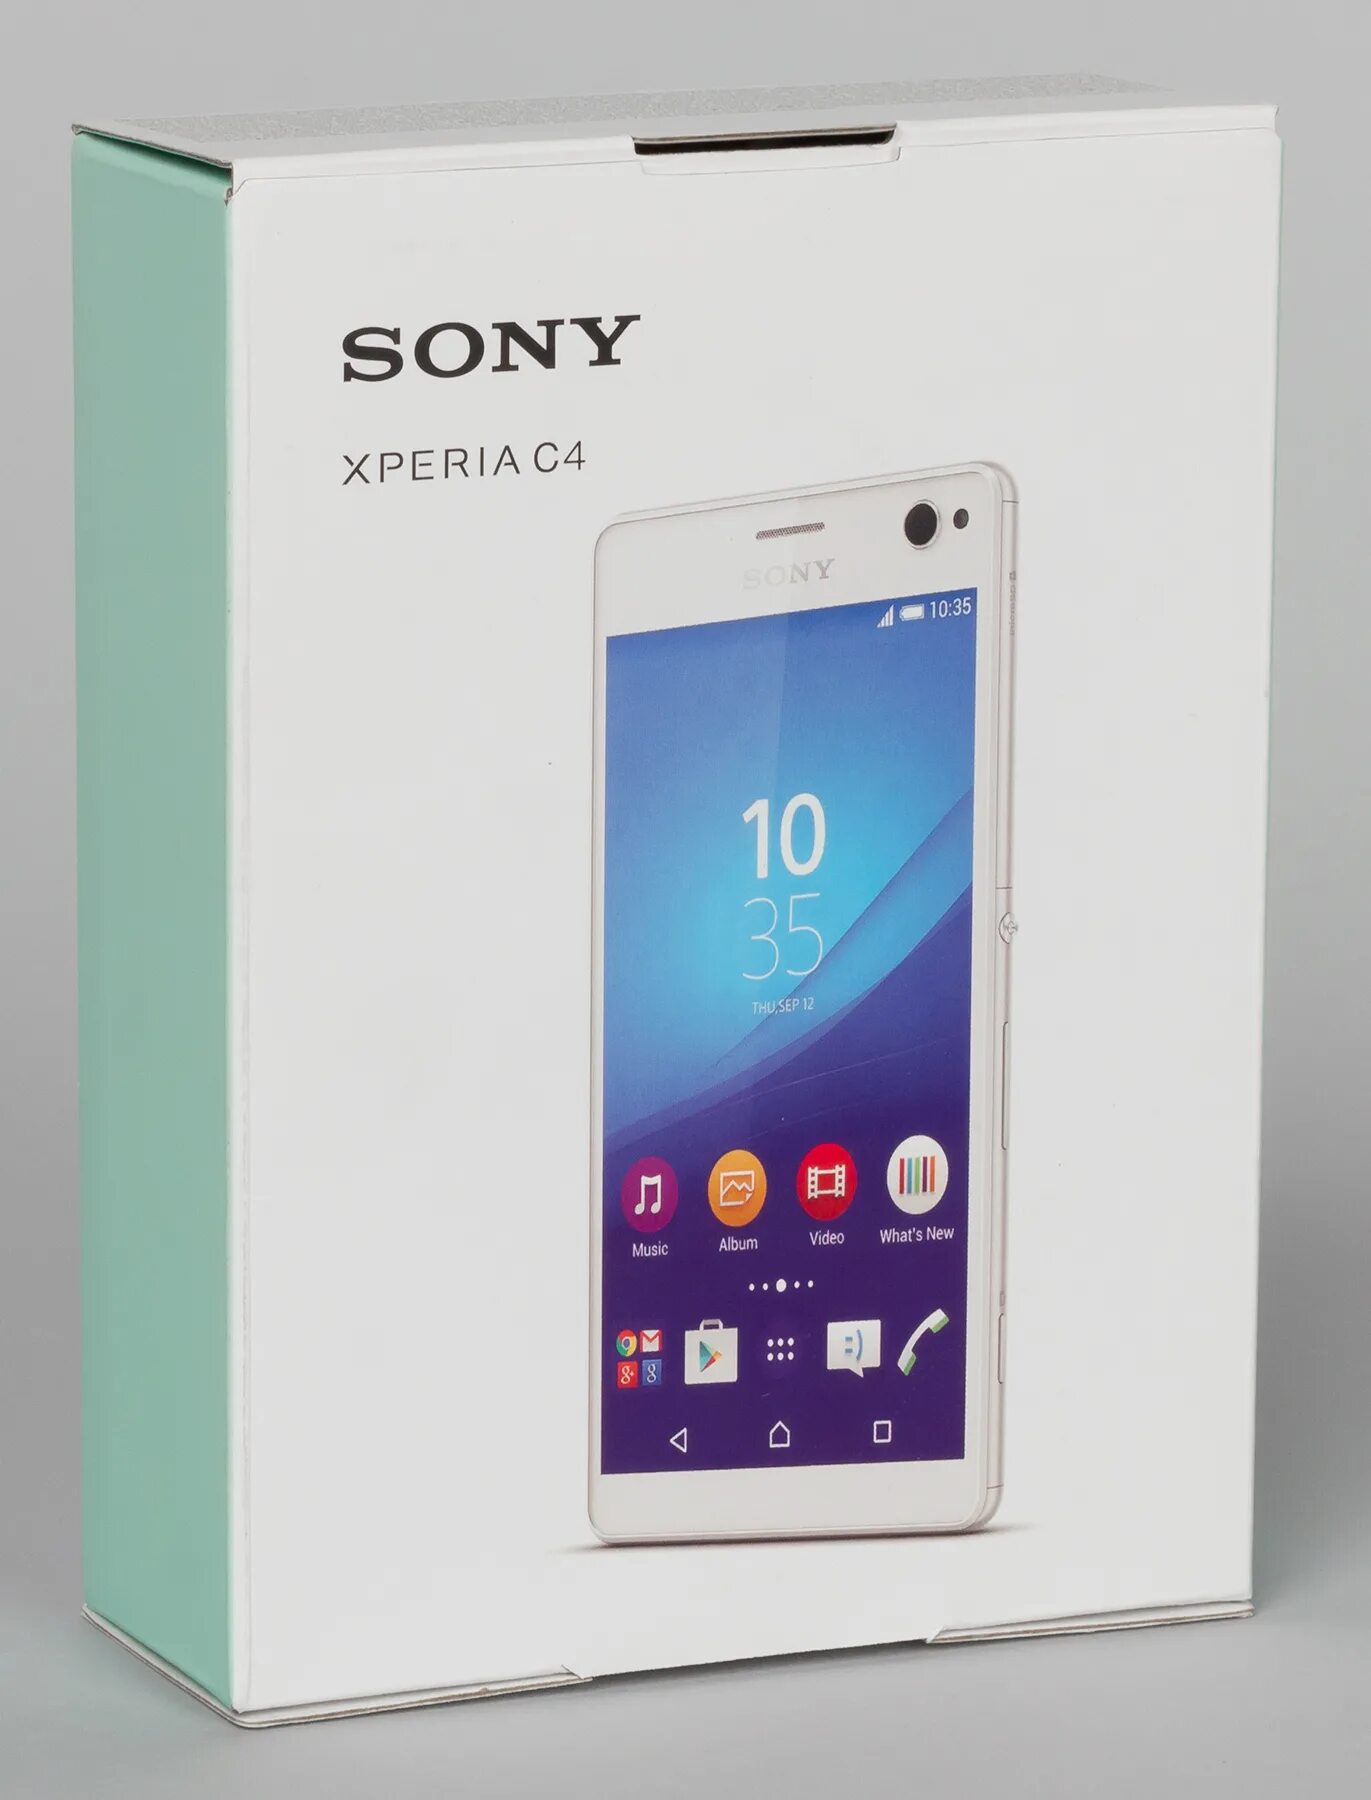 Sony Xperia c4 Mini. Sony Xperia e5303. Sony Xperia c4 e5303. Sony Xperia 4. Xperia c